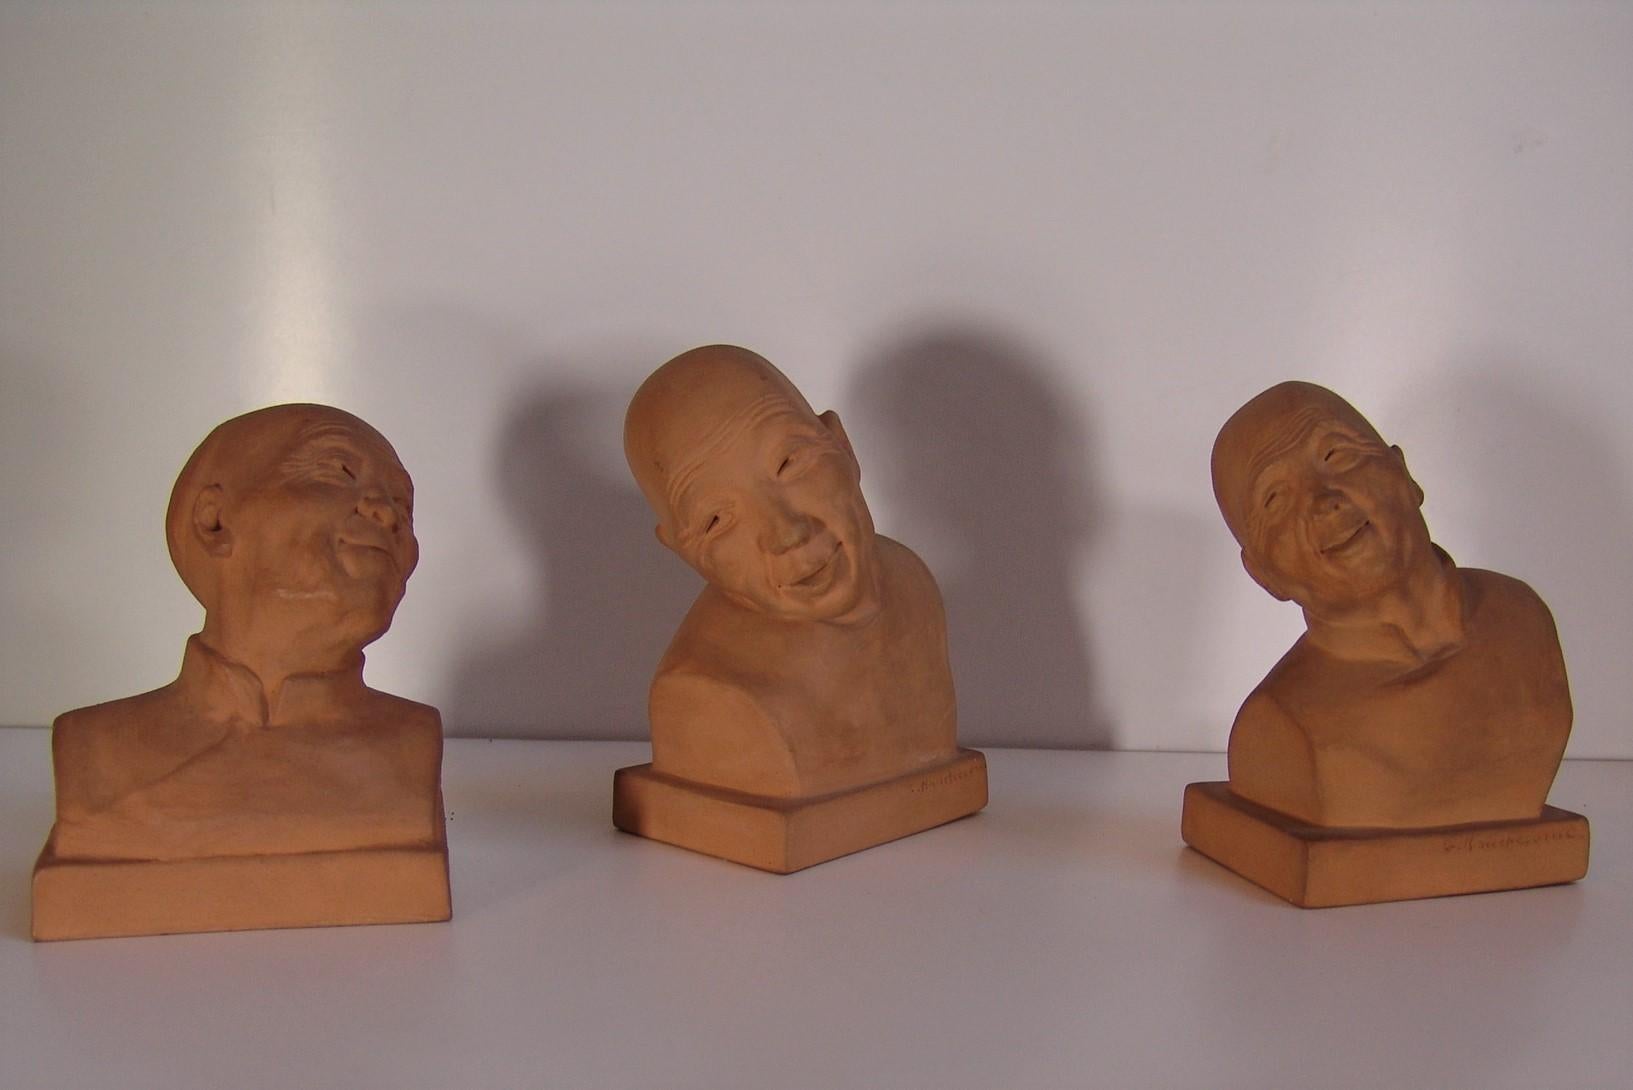 Gaston Hauchecorne Figurative Sculpture - a set of three Chinese portraits